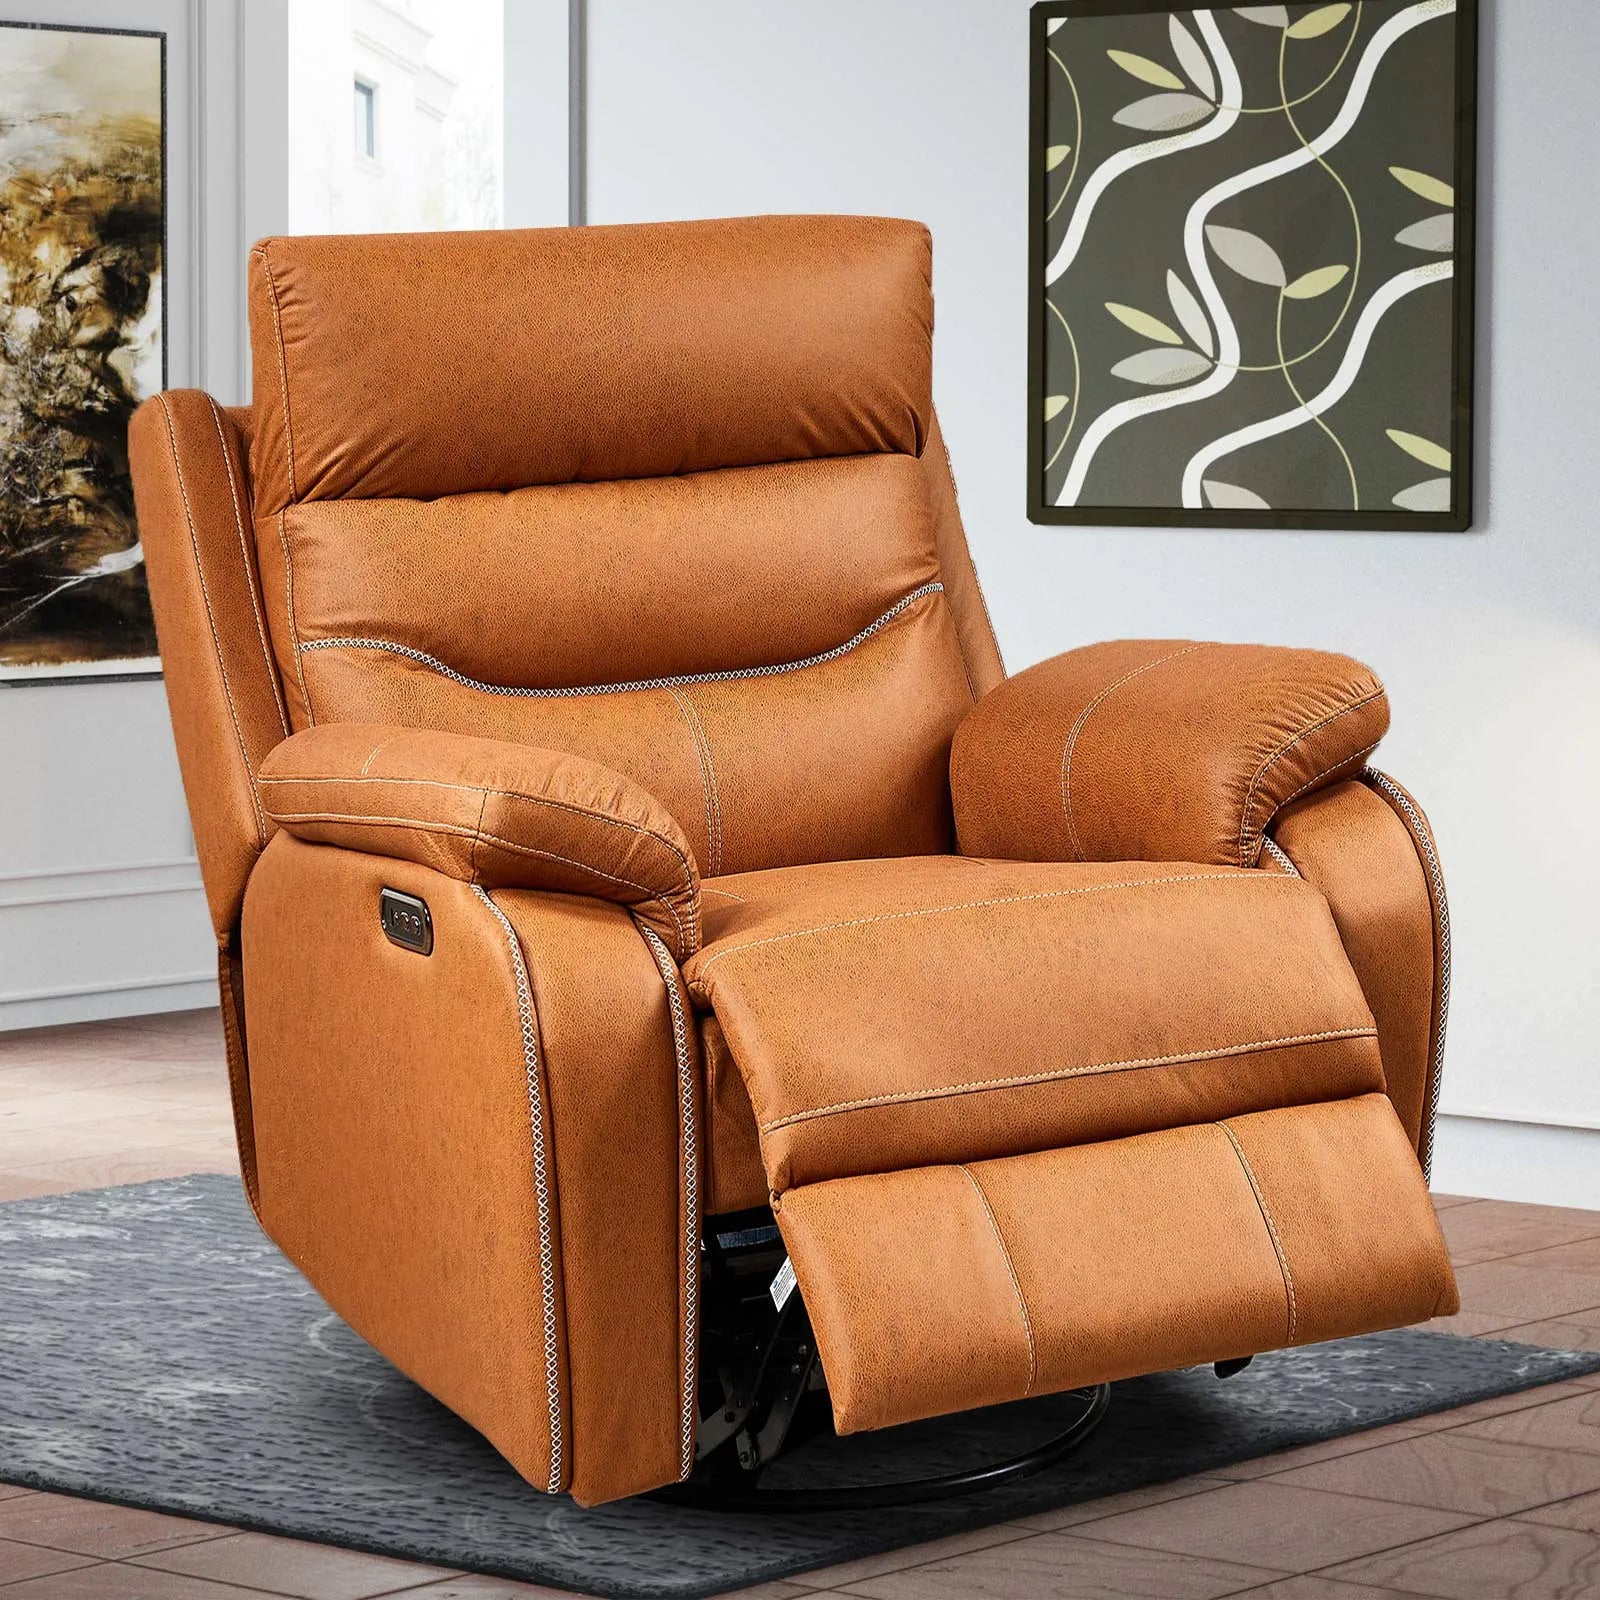 Orange leather power push button recliner